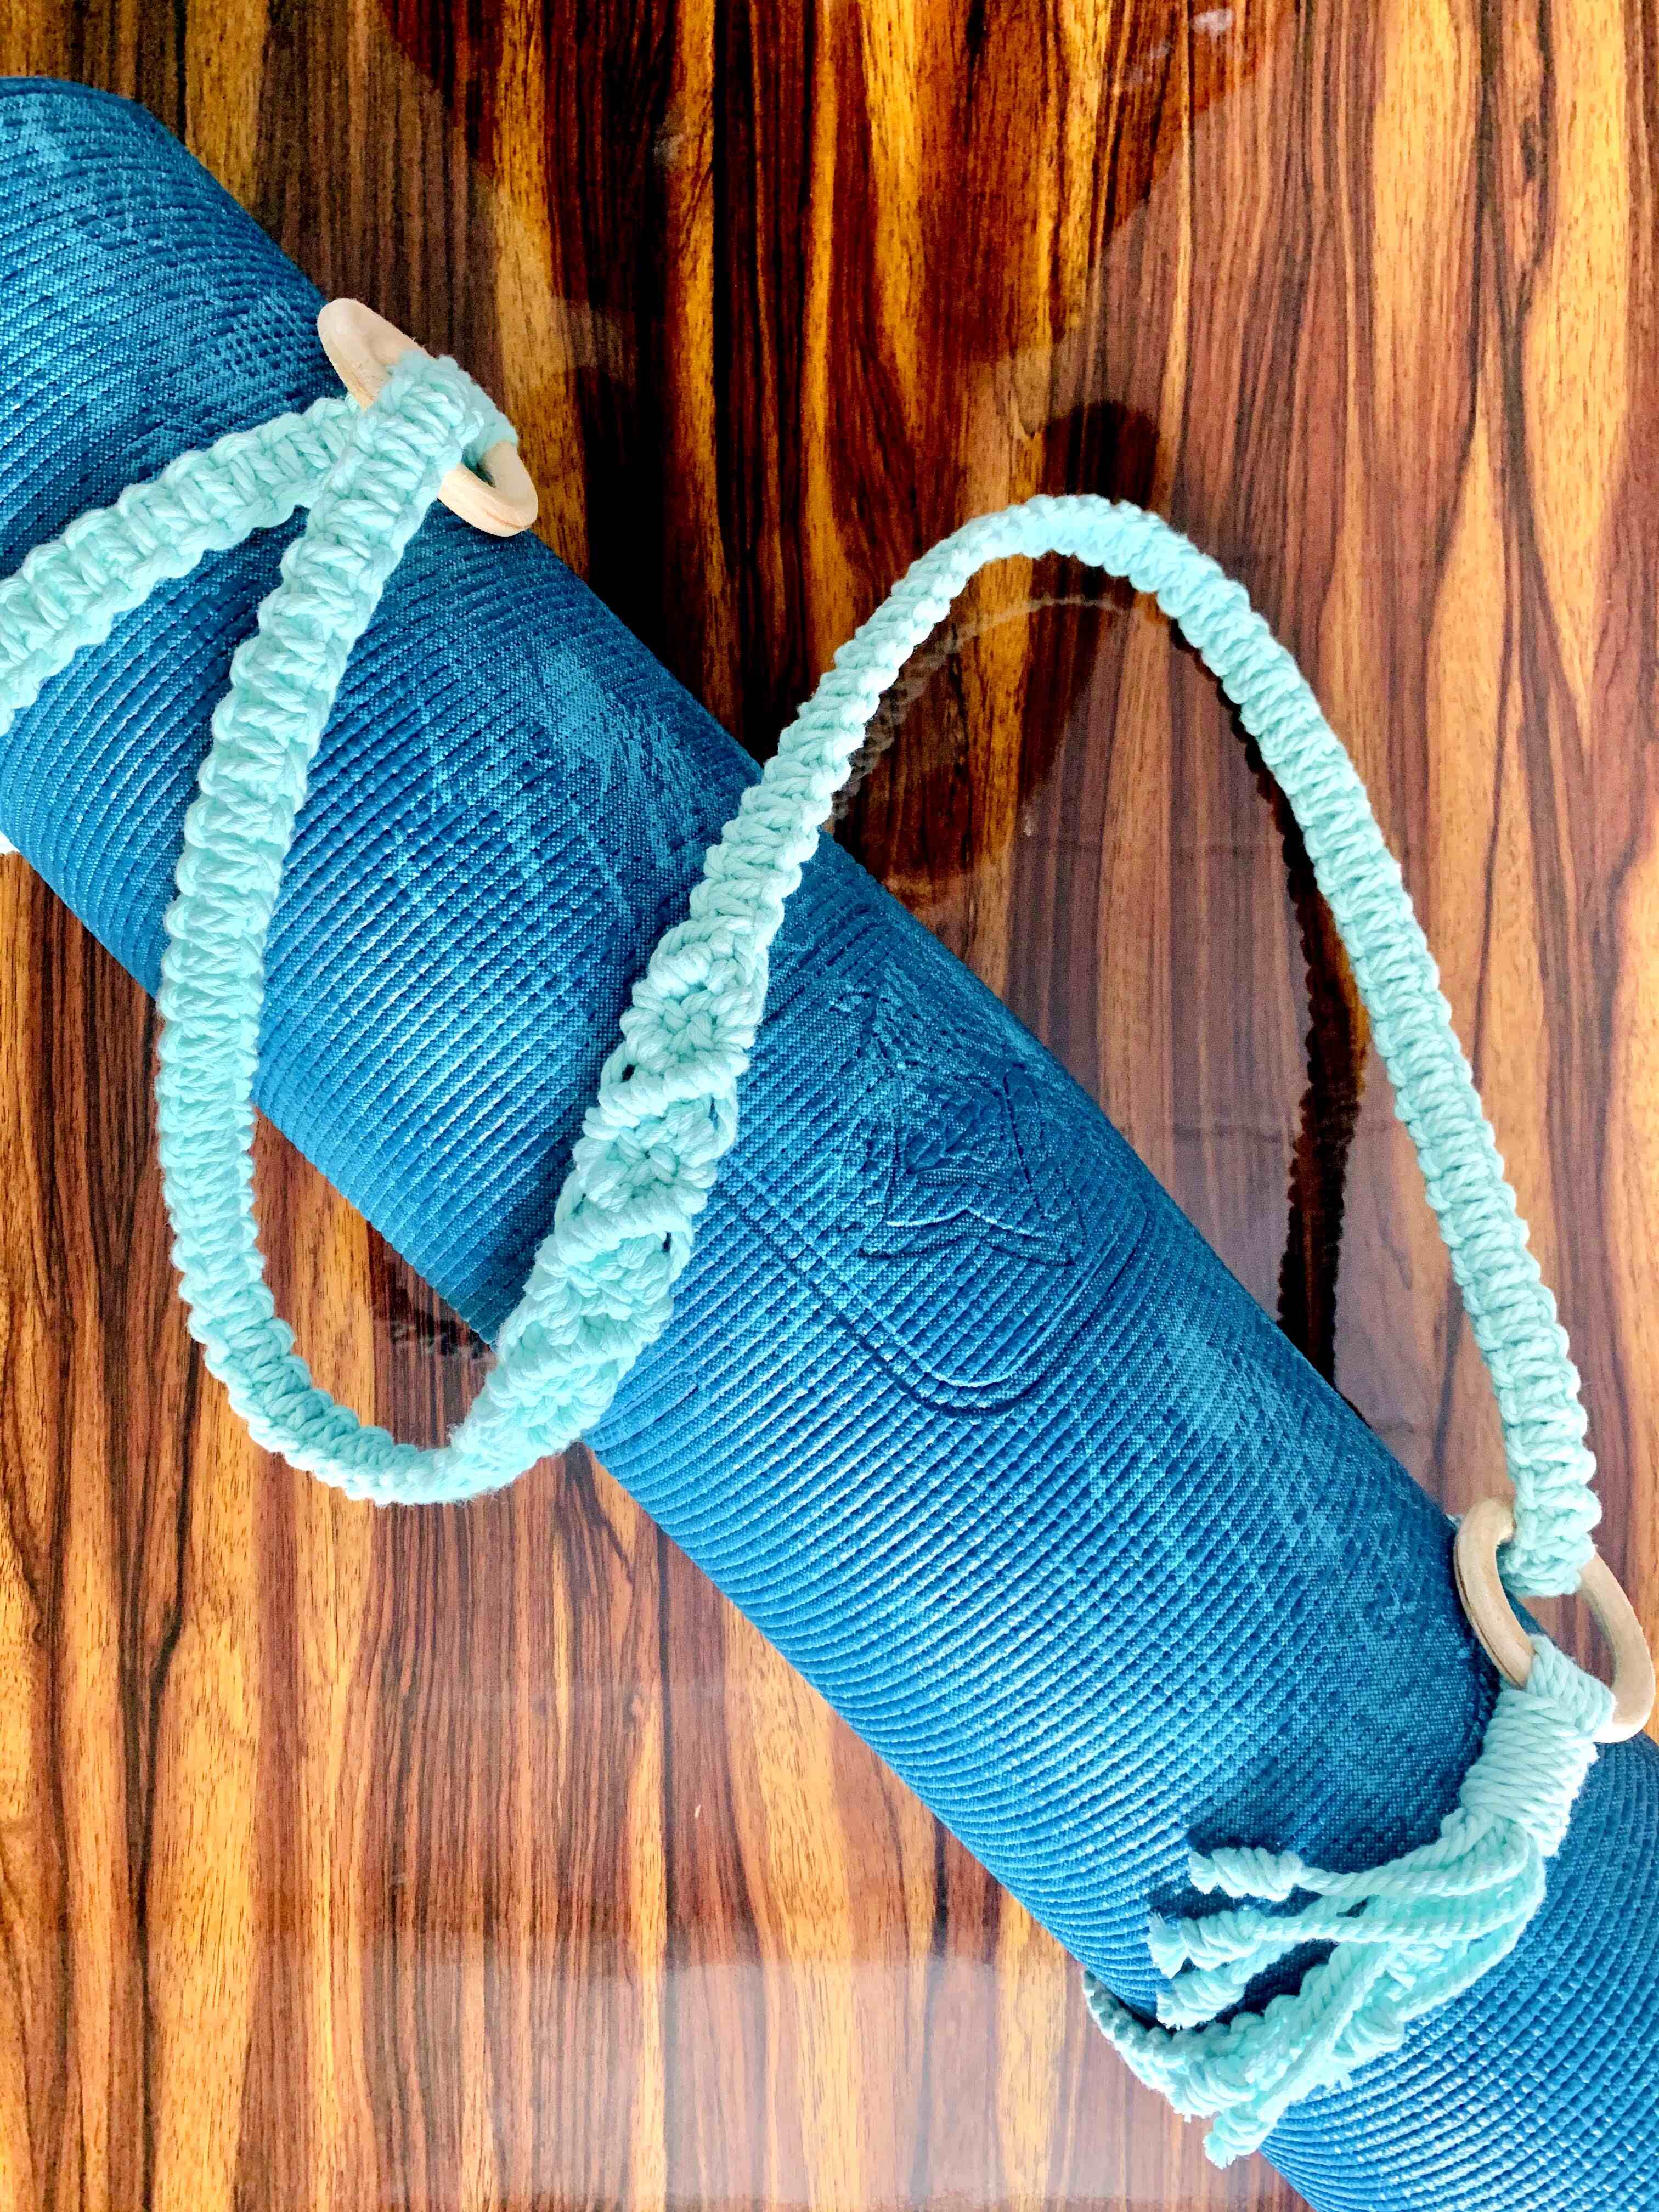 handmade macrame yoga mat travel strap